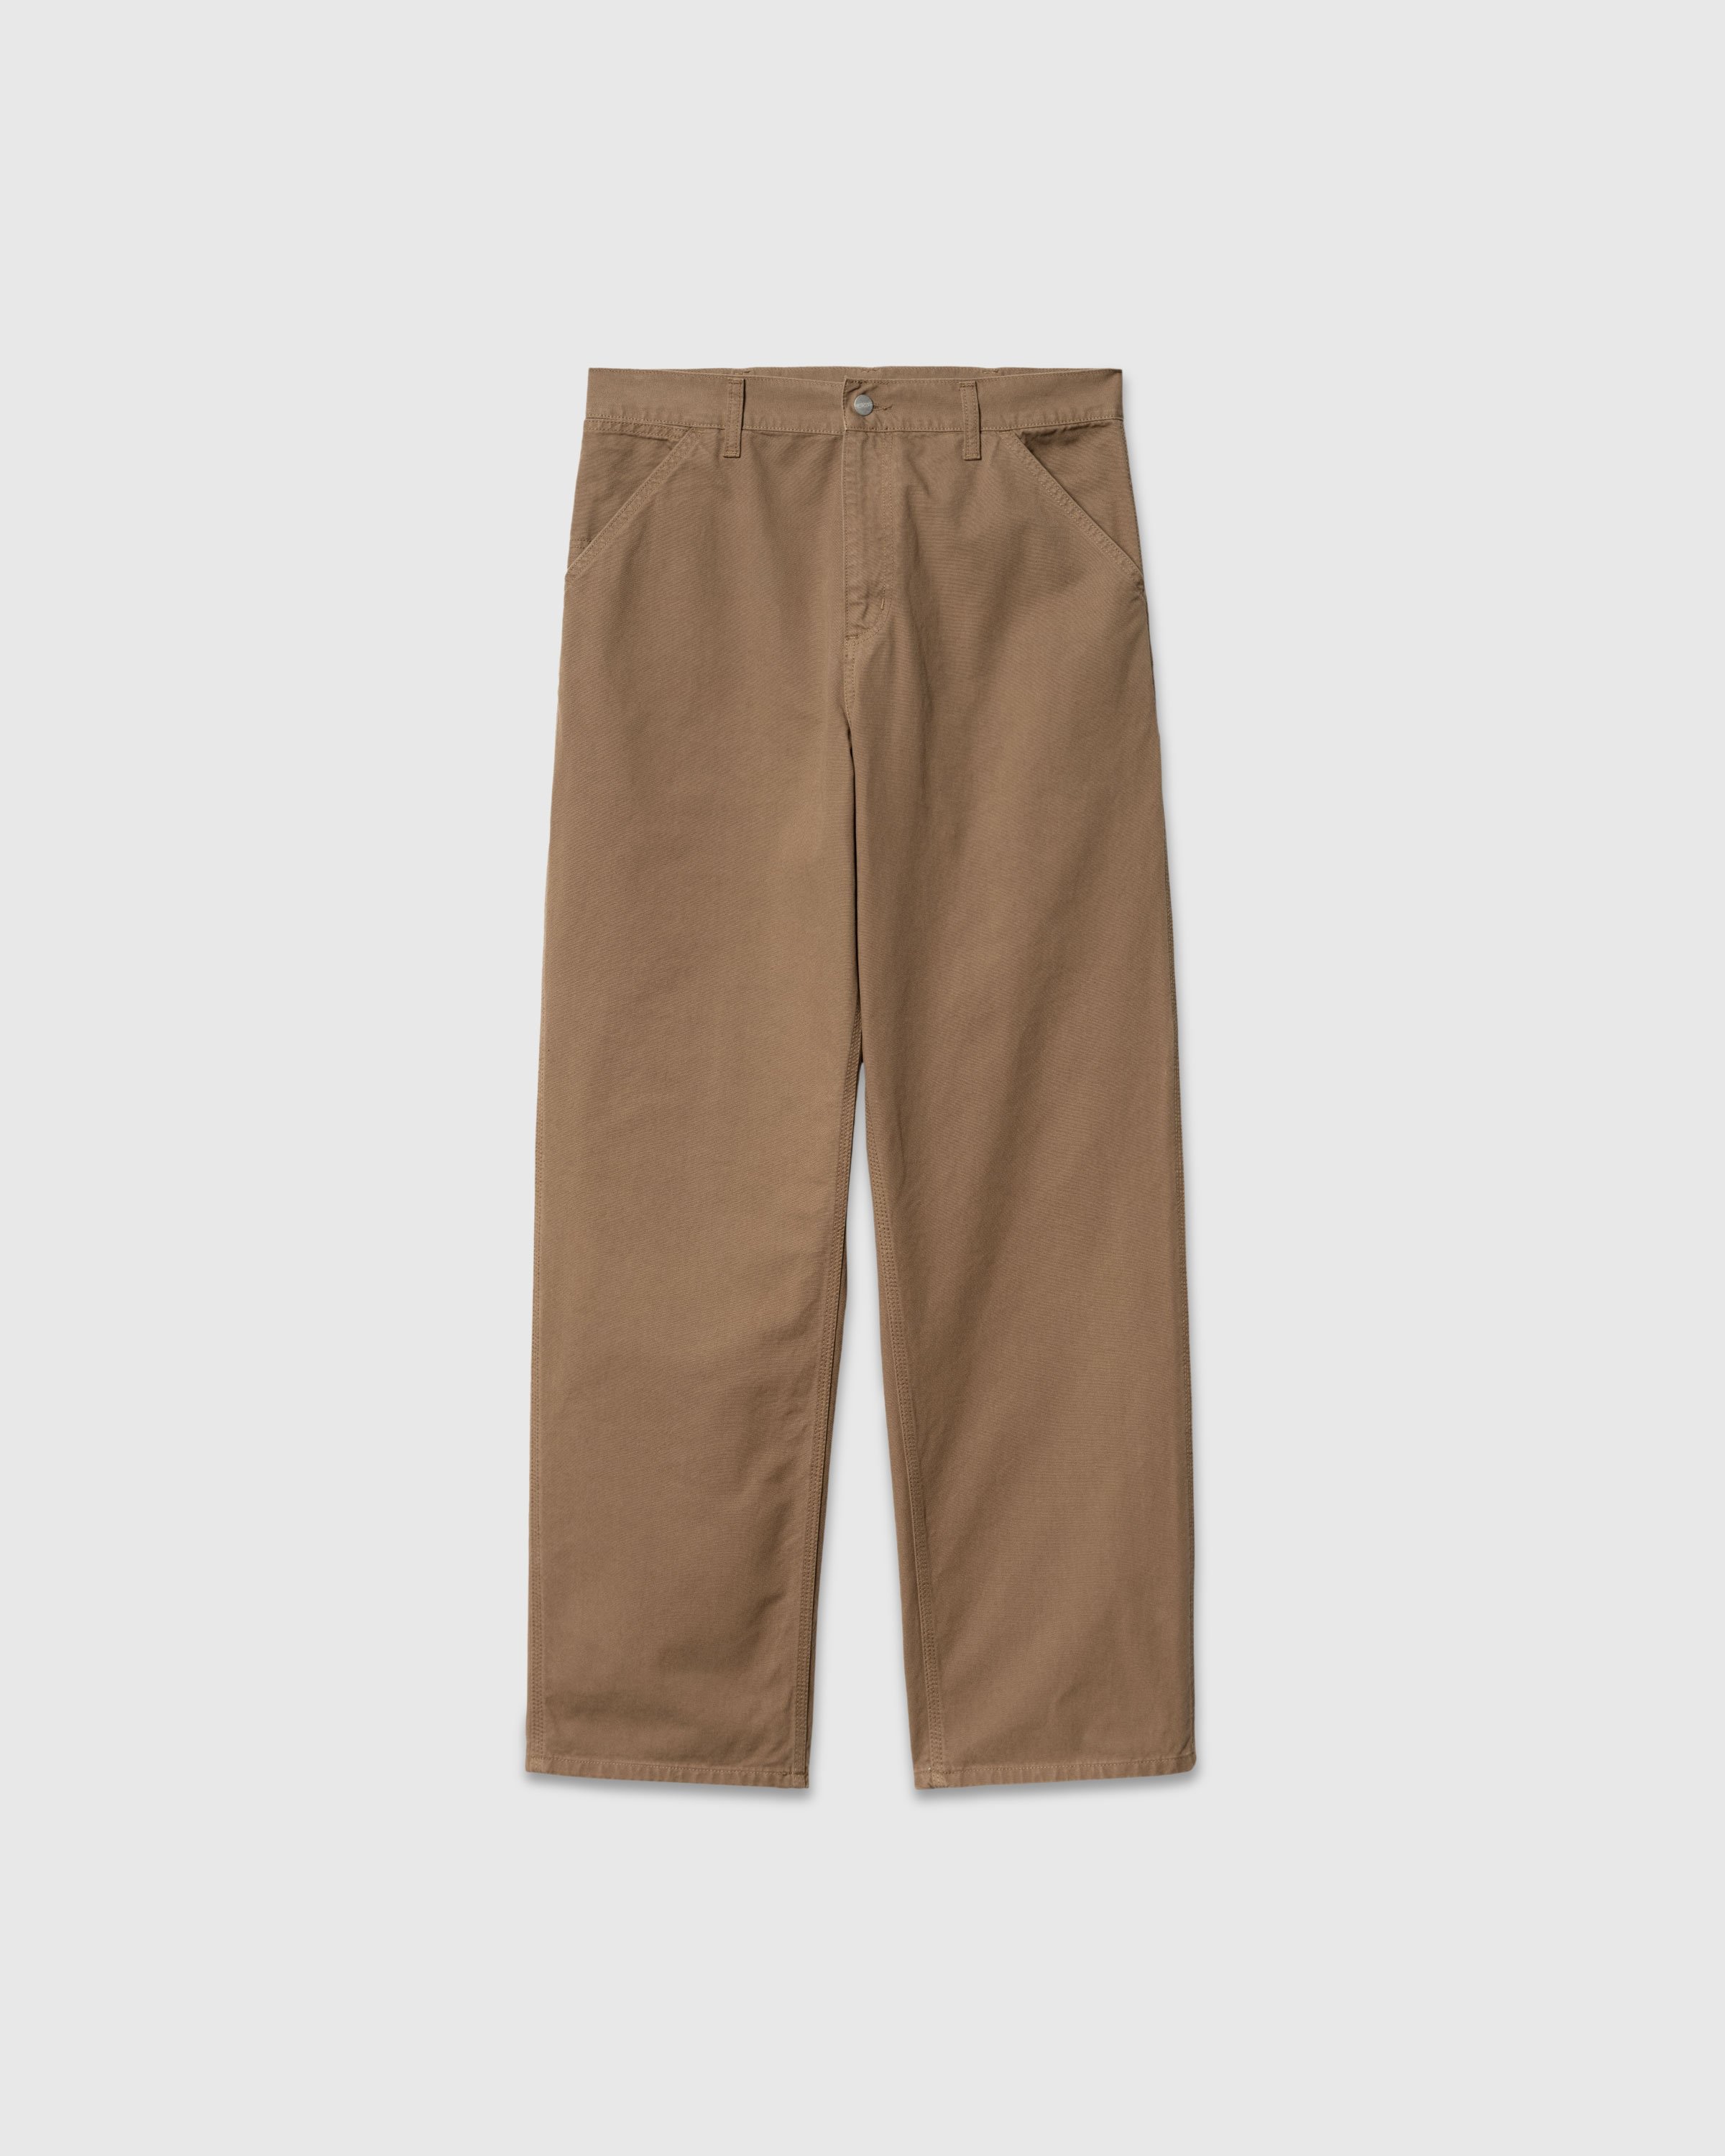 Carhartt WIP - Single Knee Pant Buffalo - Clothing - Brown - Image 1